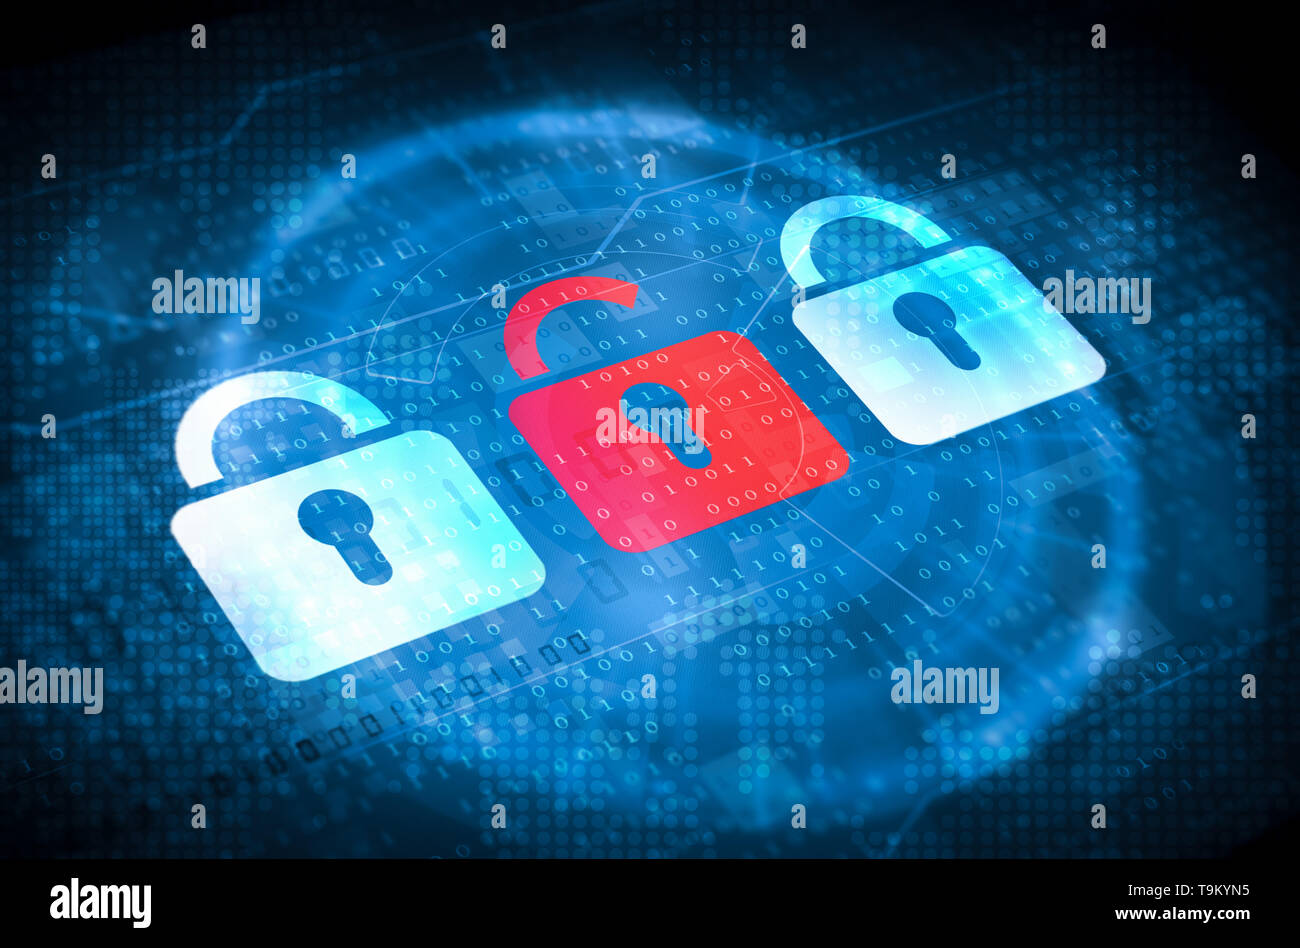 padlocks symbols. internet security concept Stock Photo